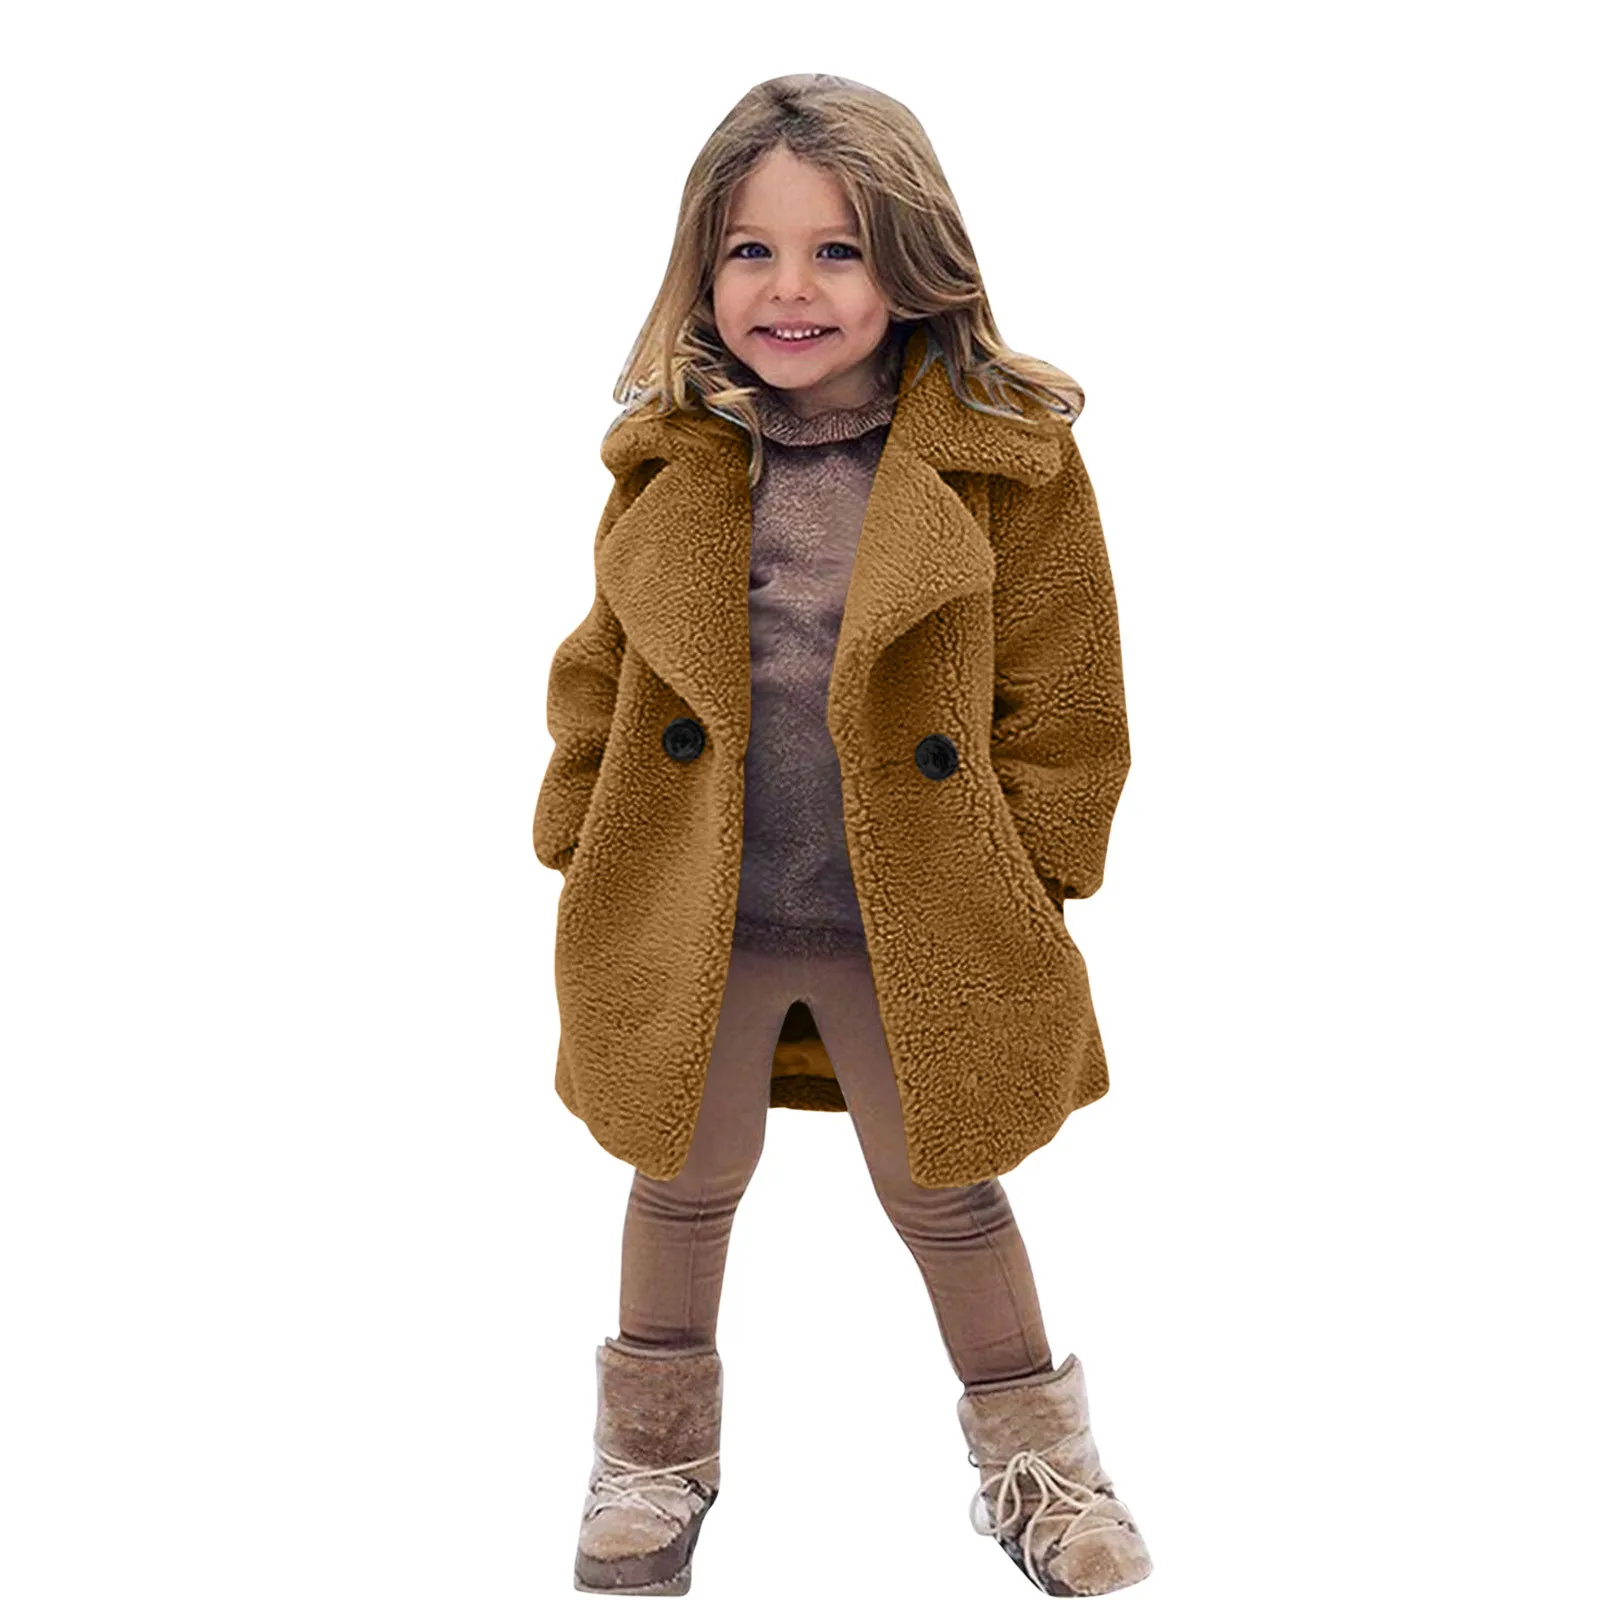 Toddler Jackets Baby Kids Girls Autumn Winter Windproof Thicken Coat Jacket Warm Fleece Girls Parkas Outerwear Coats Clothes